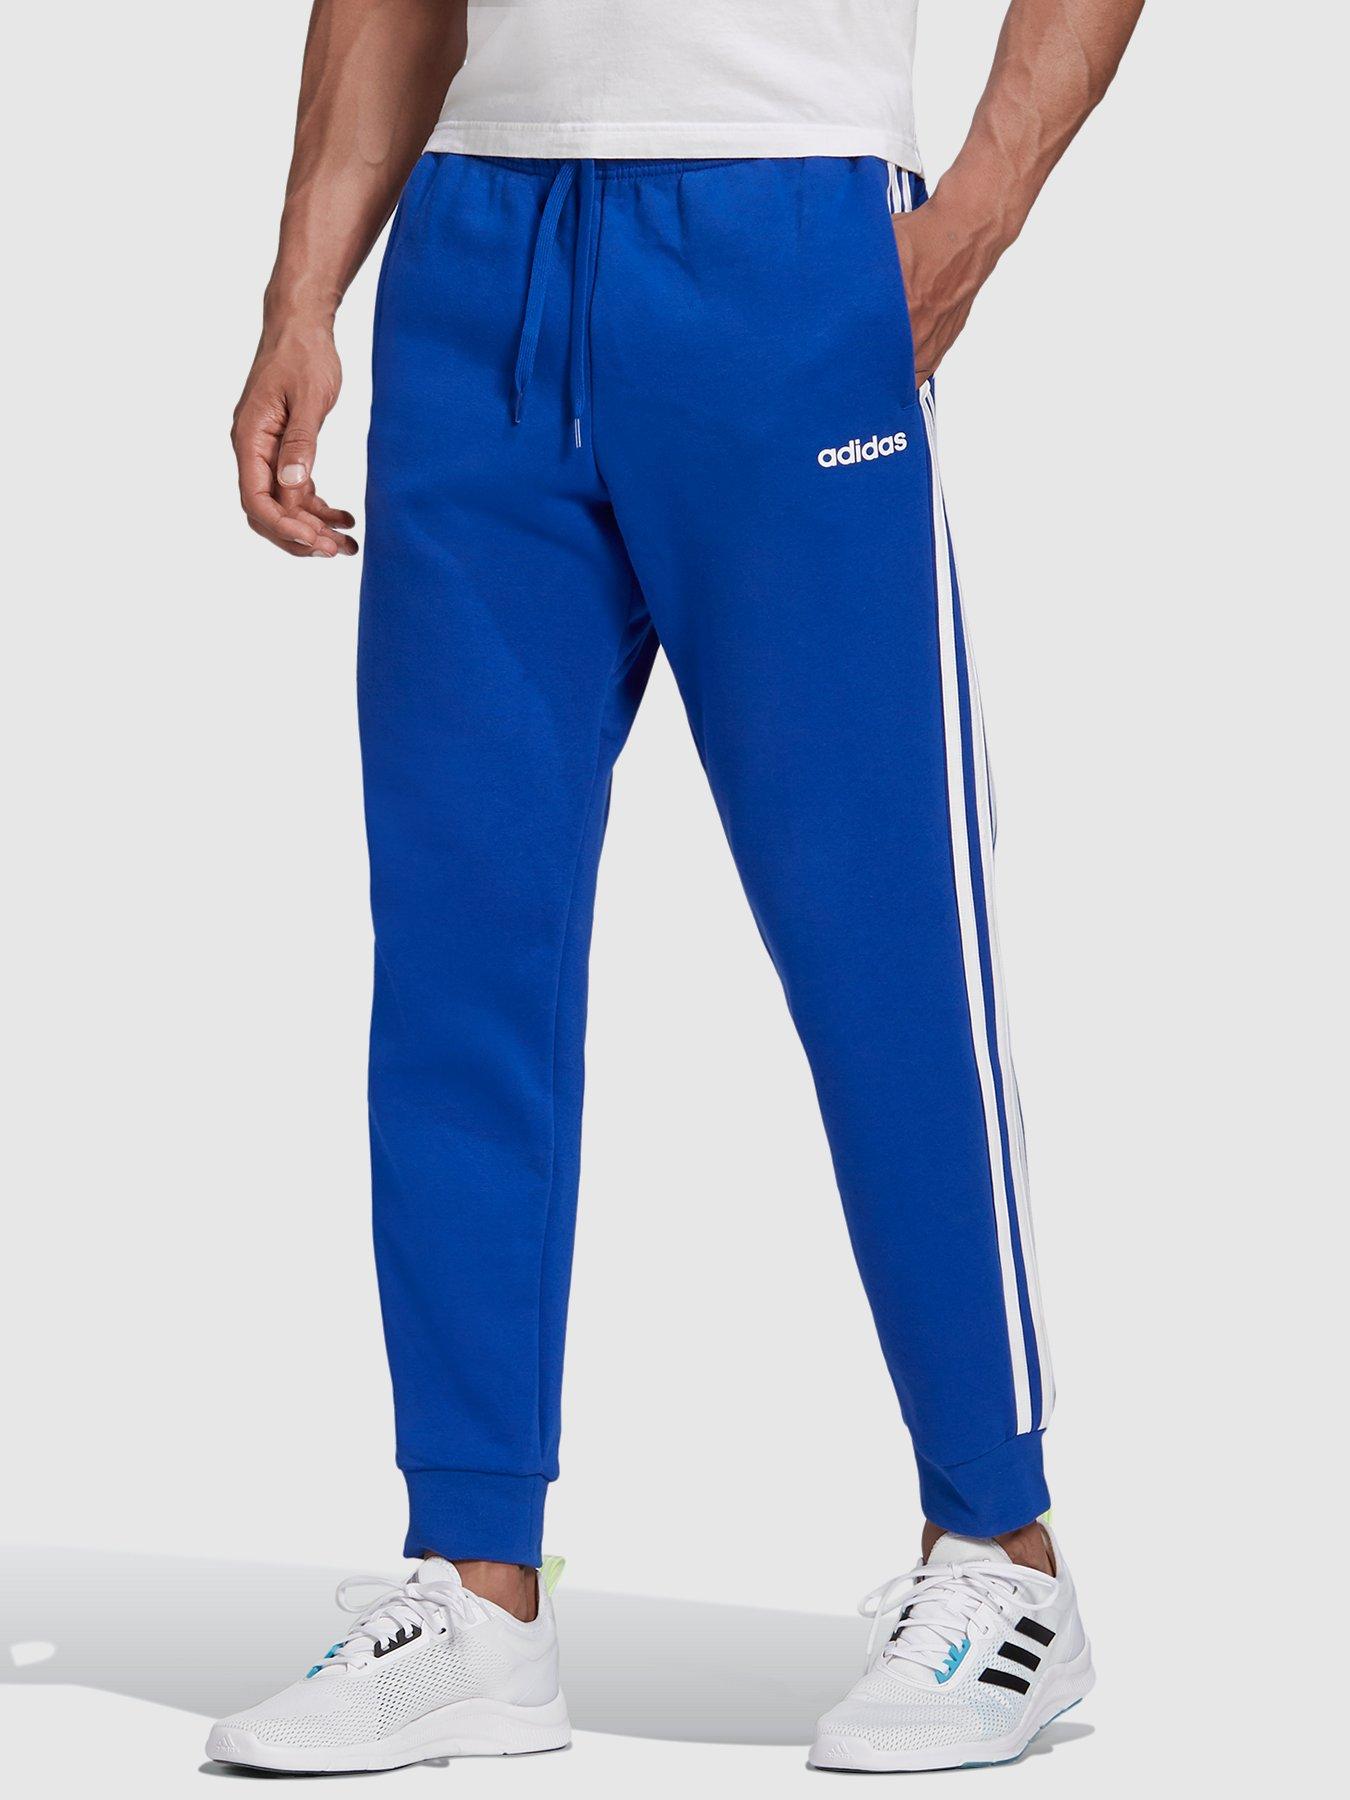 mens blue adidas joggers